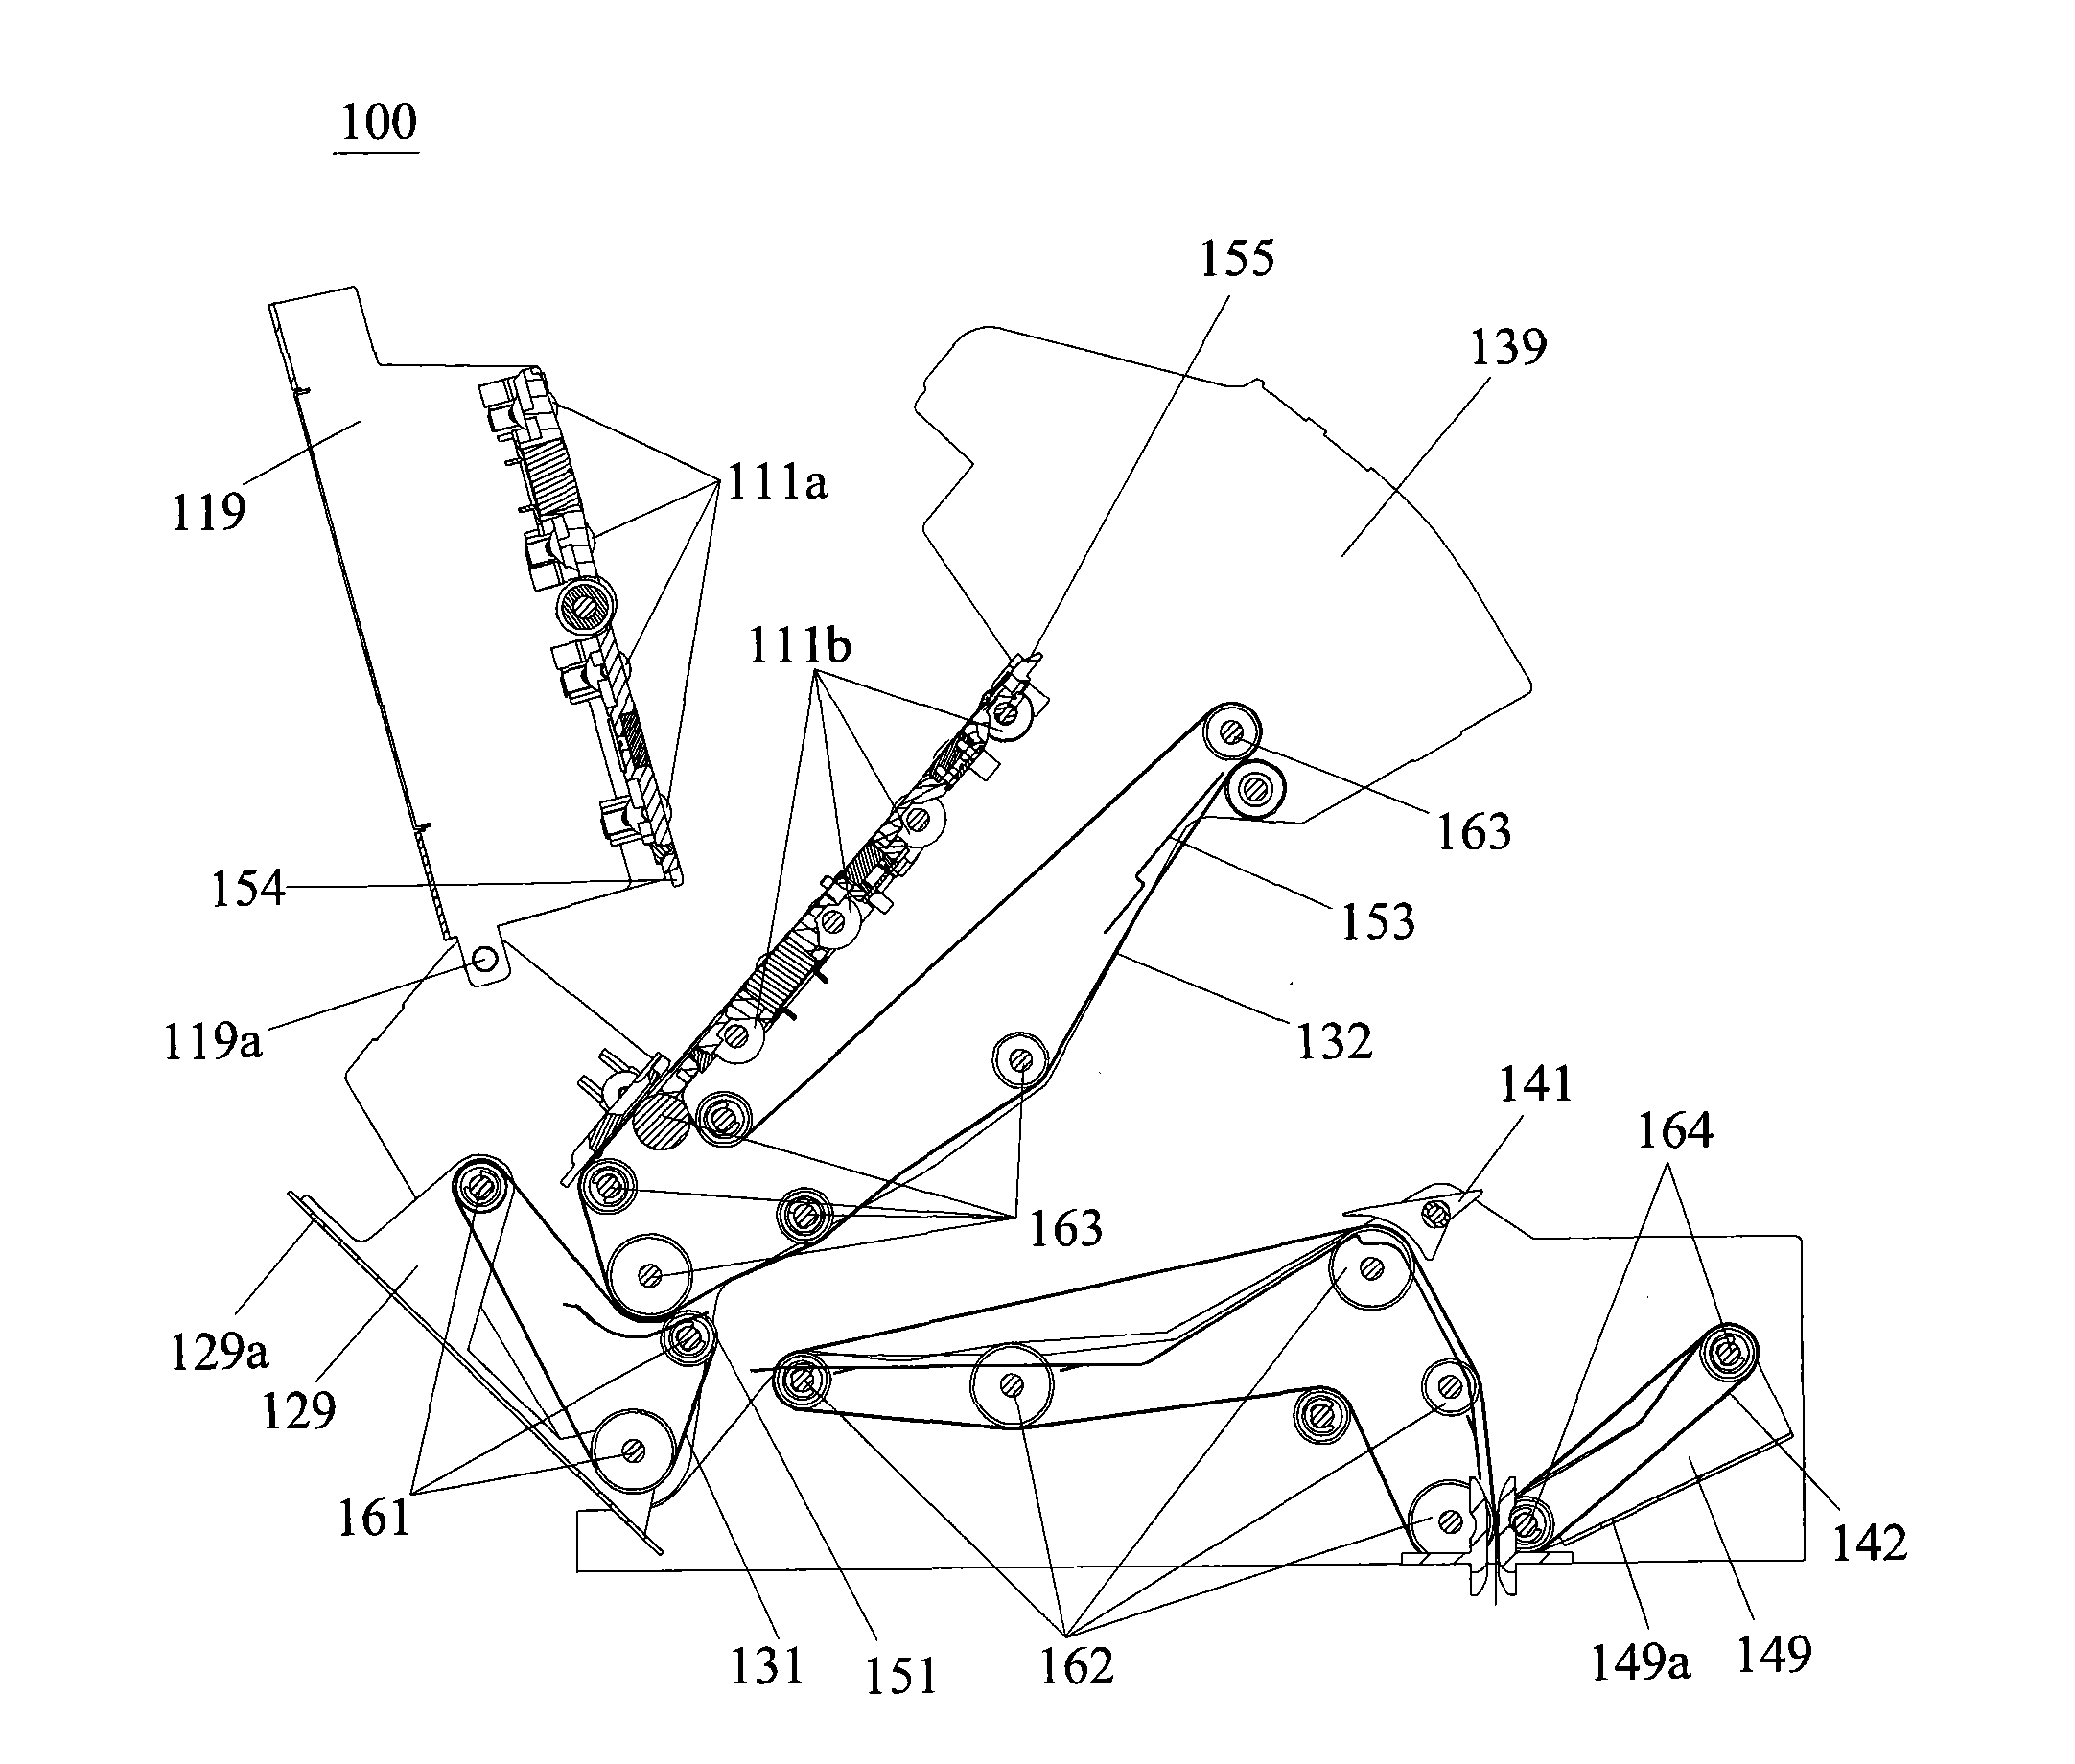 Flaky medium conveying mechanism